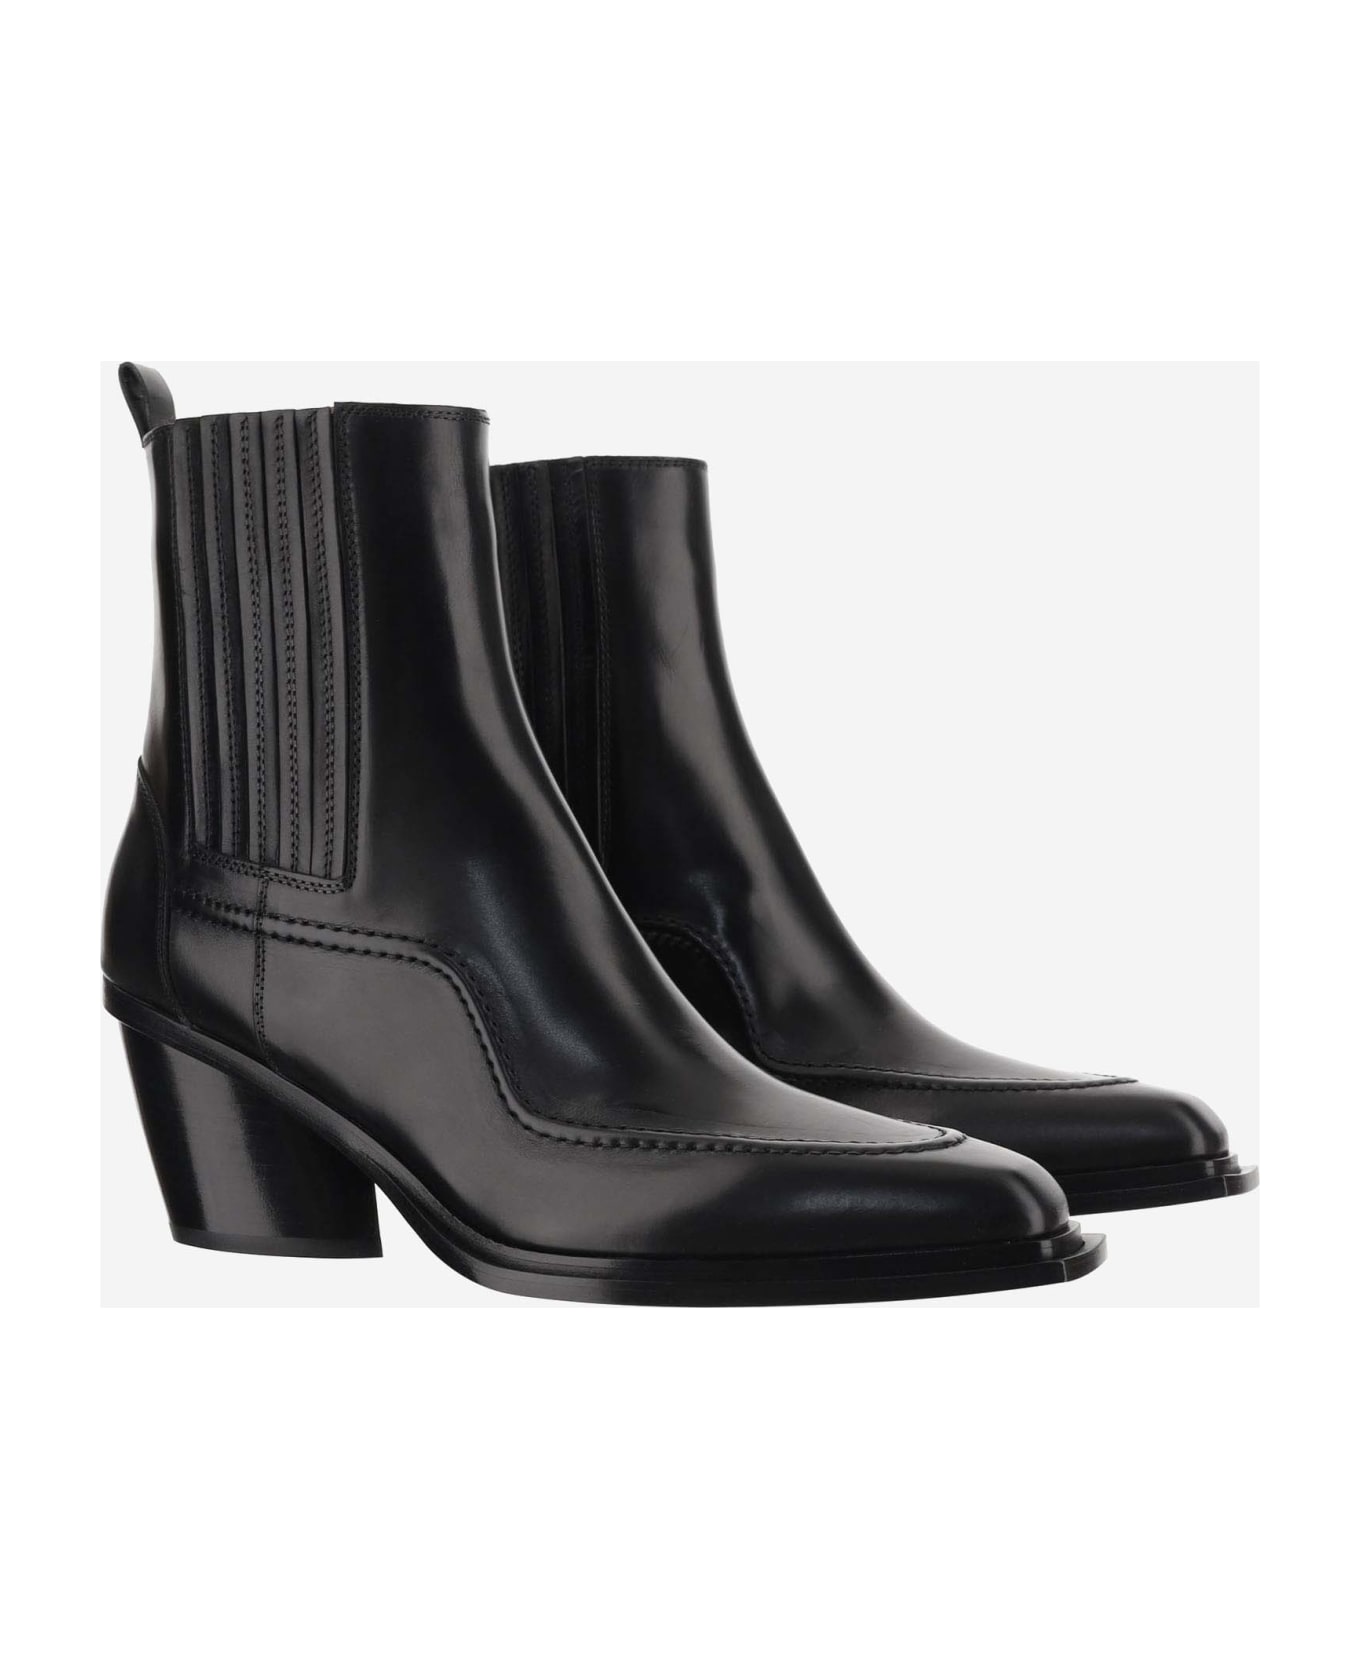 Sartore Leather Boots - Black ブーツ